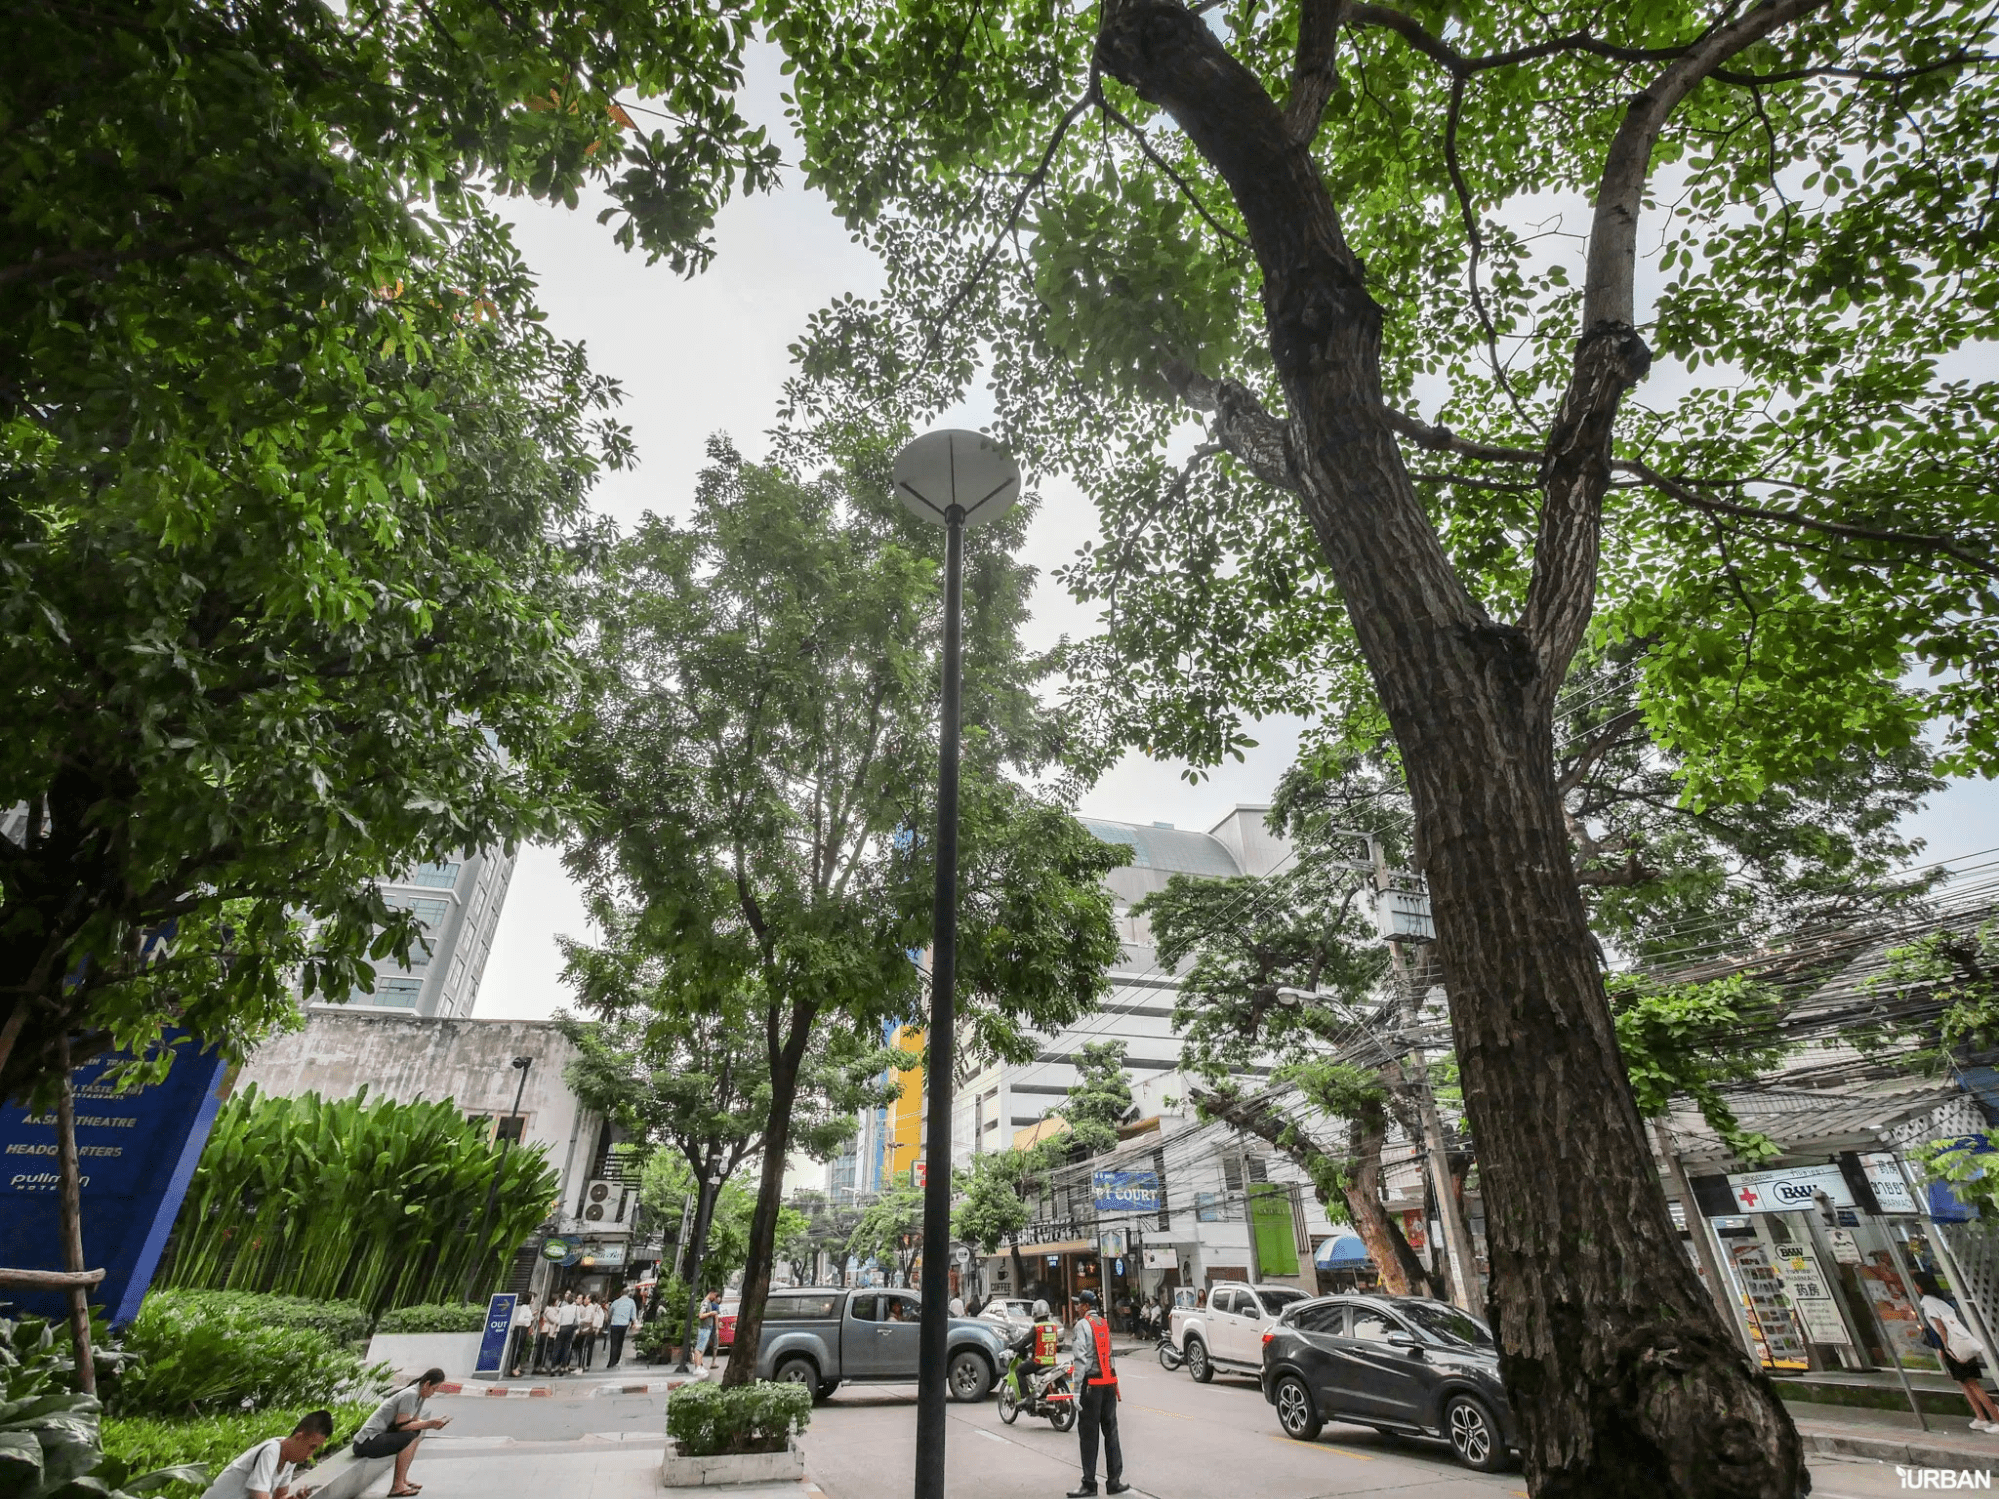 Bangkok's new walking street on Rang Nam Road